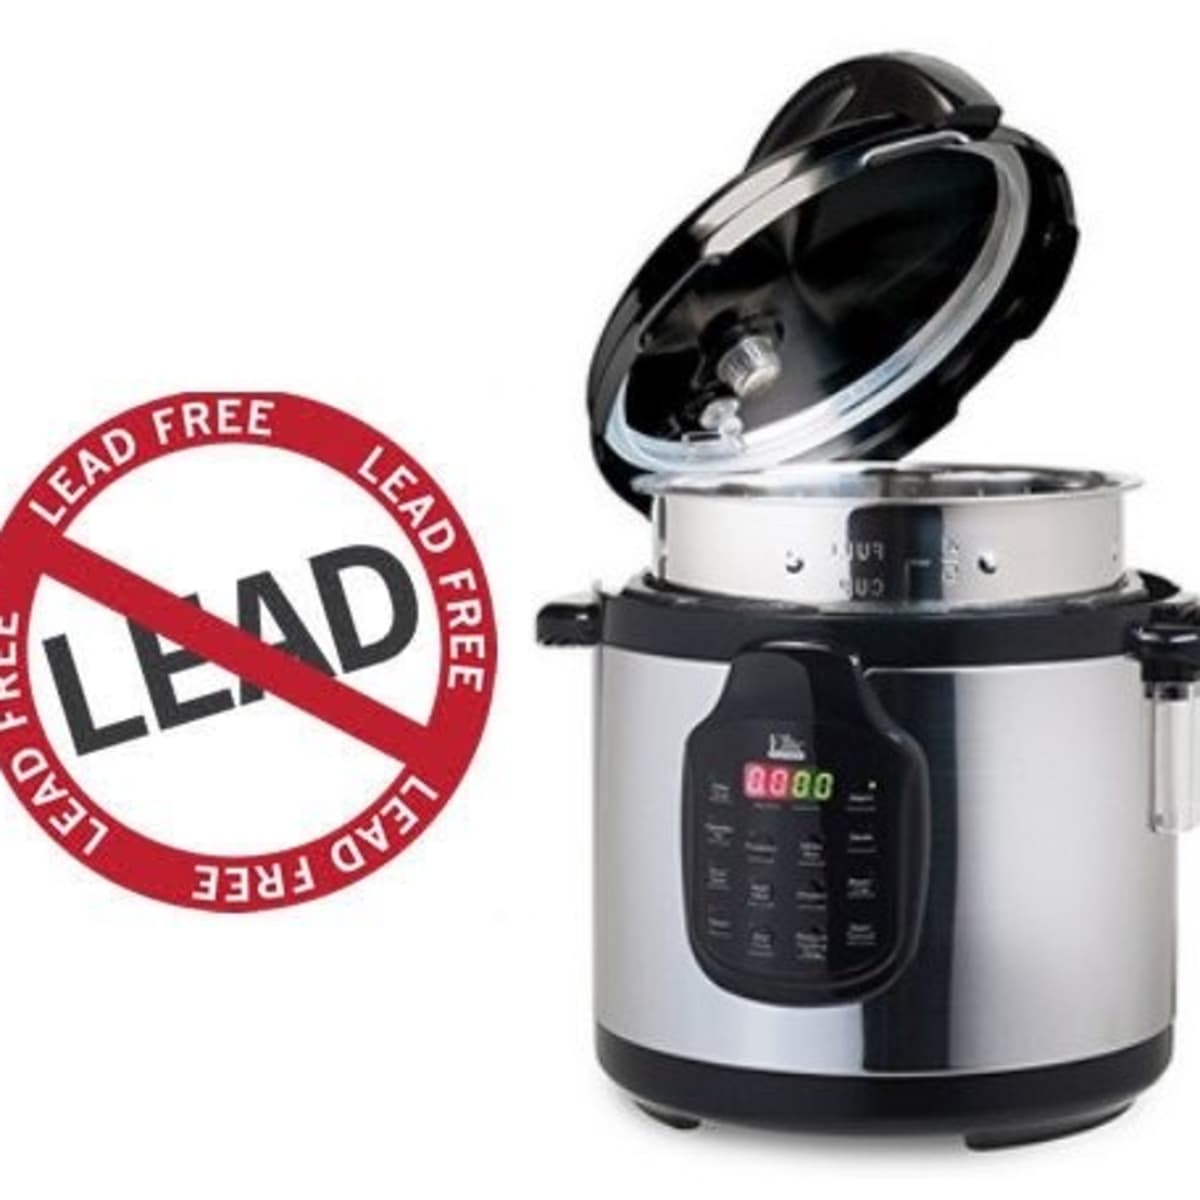 Crock-Pot Smart-Pot 4-Quart Slow Cooker Stainless-Steel/Black SCCPVP400-S -  Best Buy